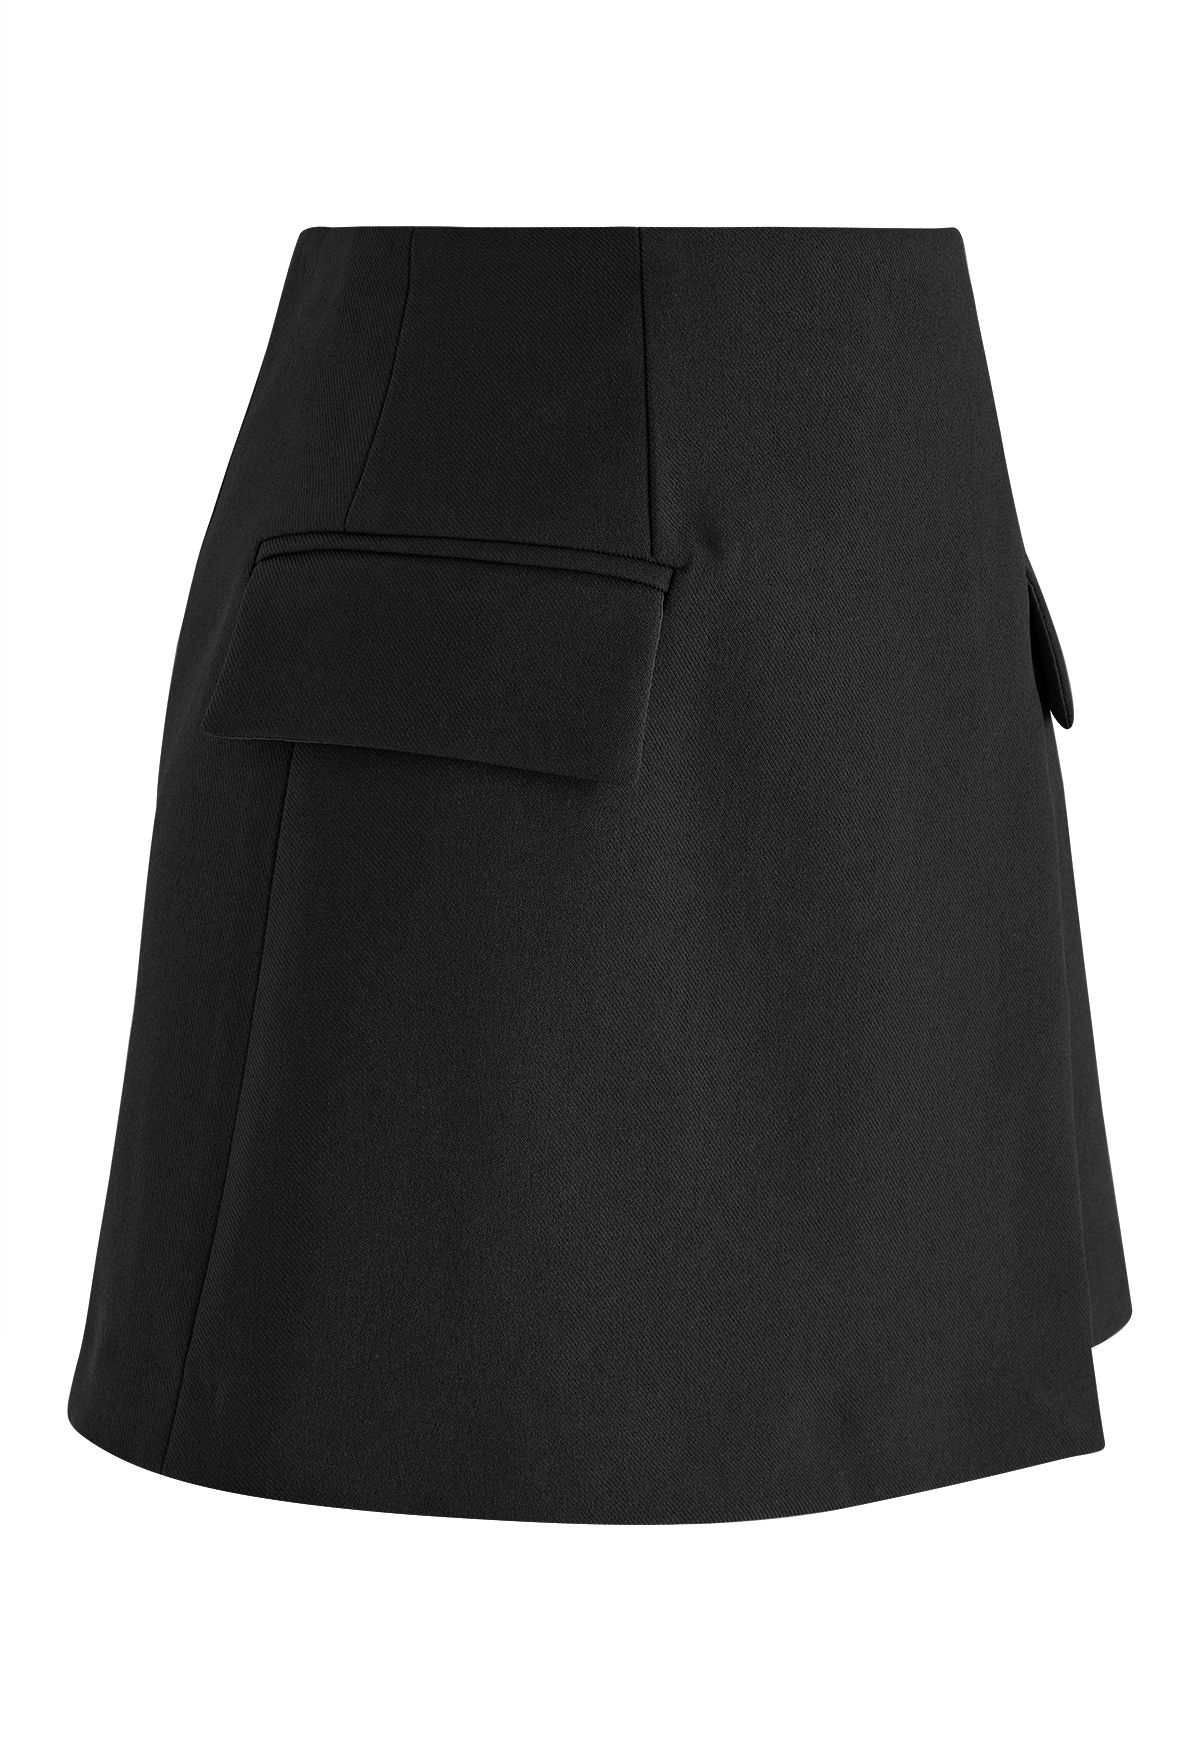 Groovy Flap Mini Bud Skirt in Black